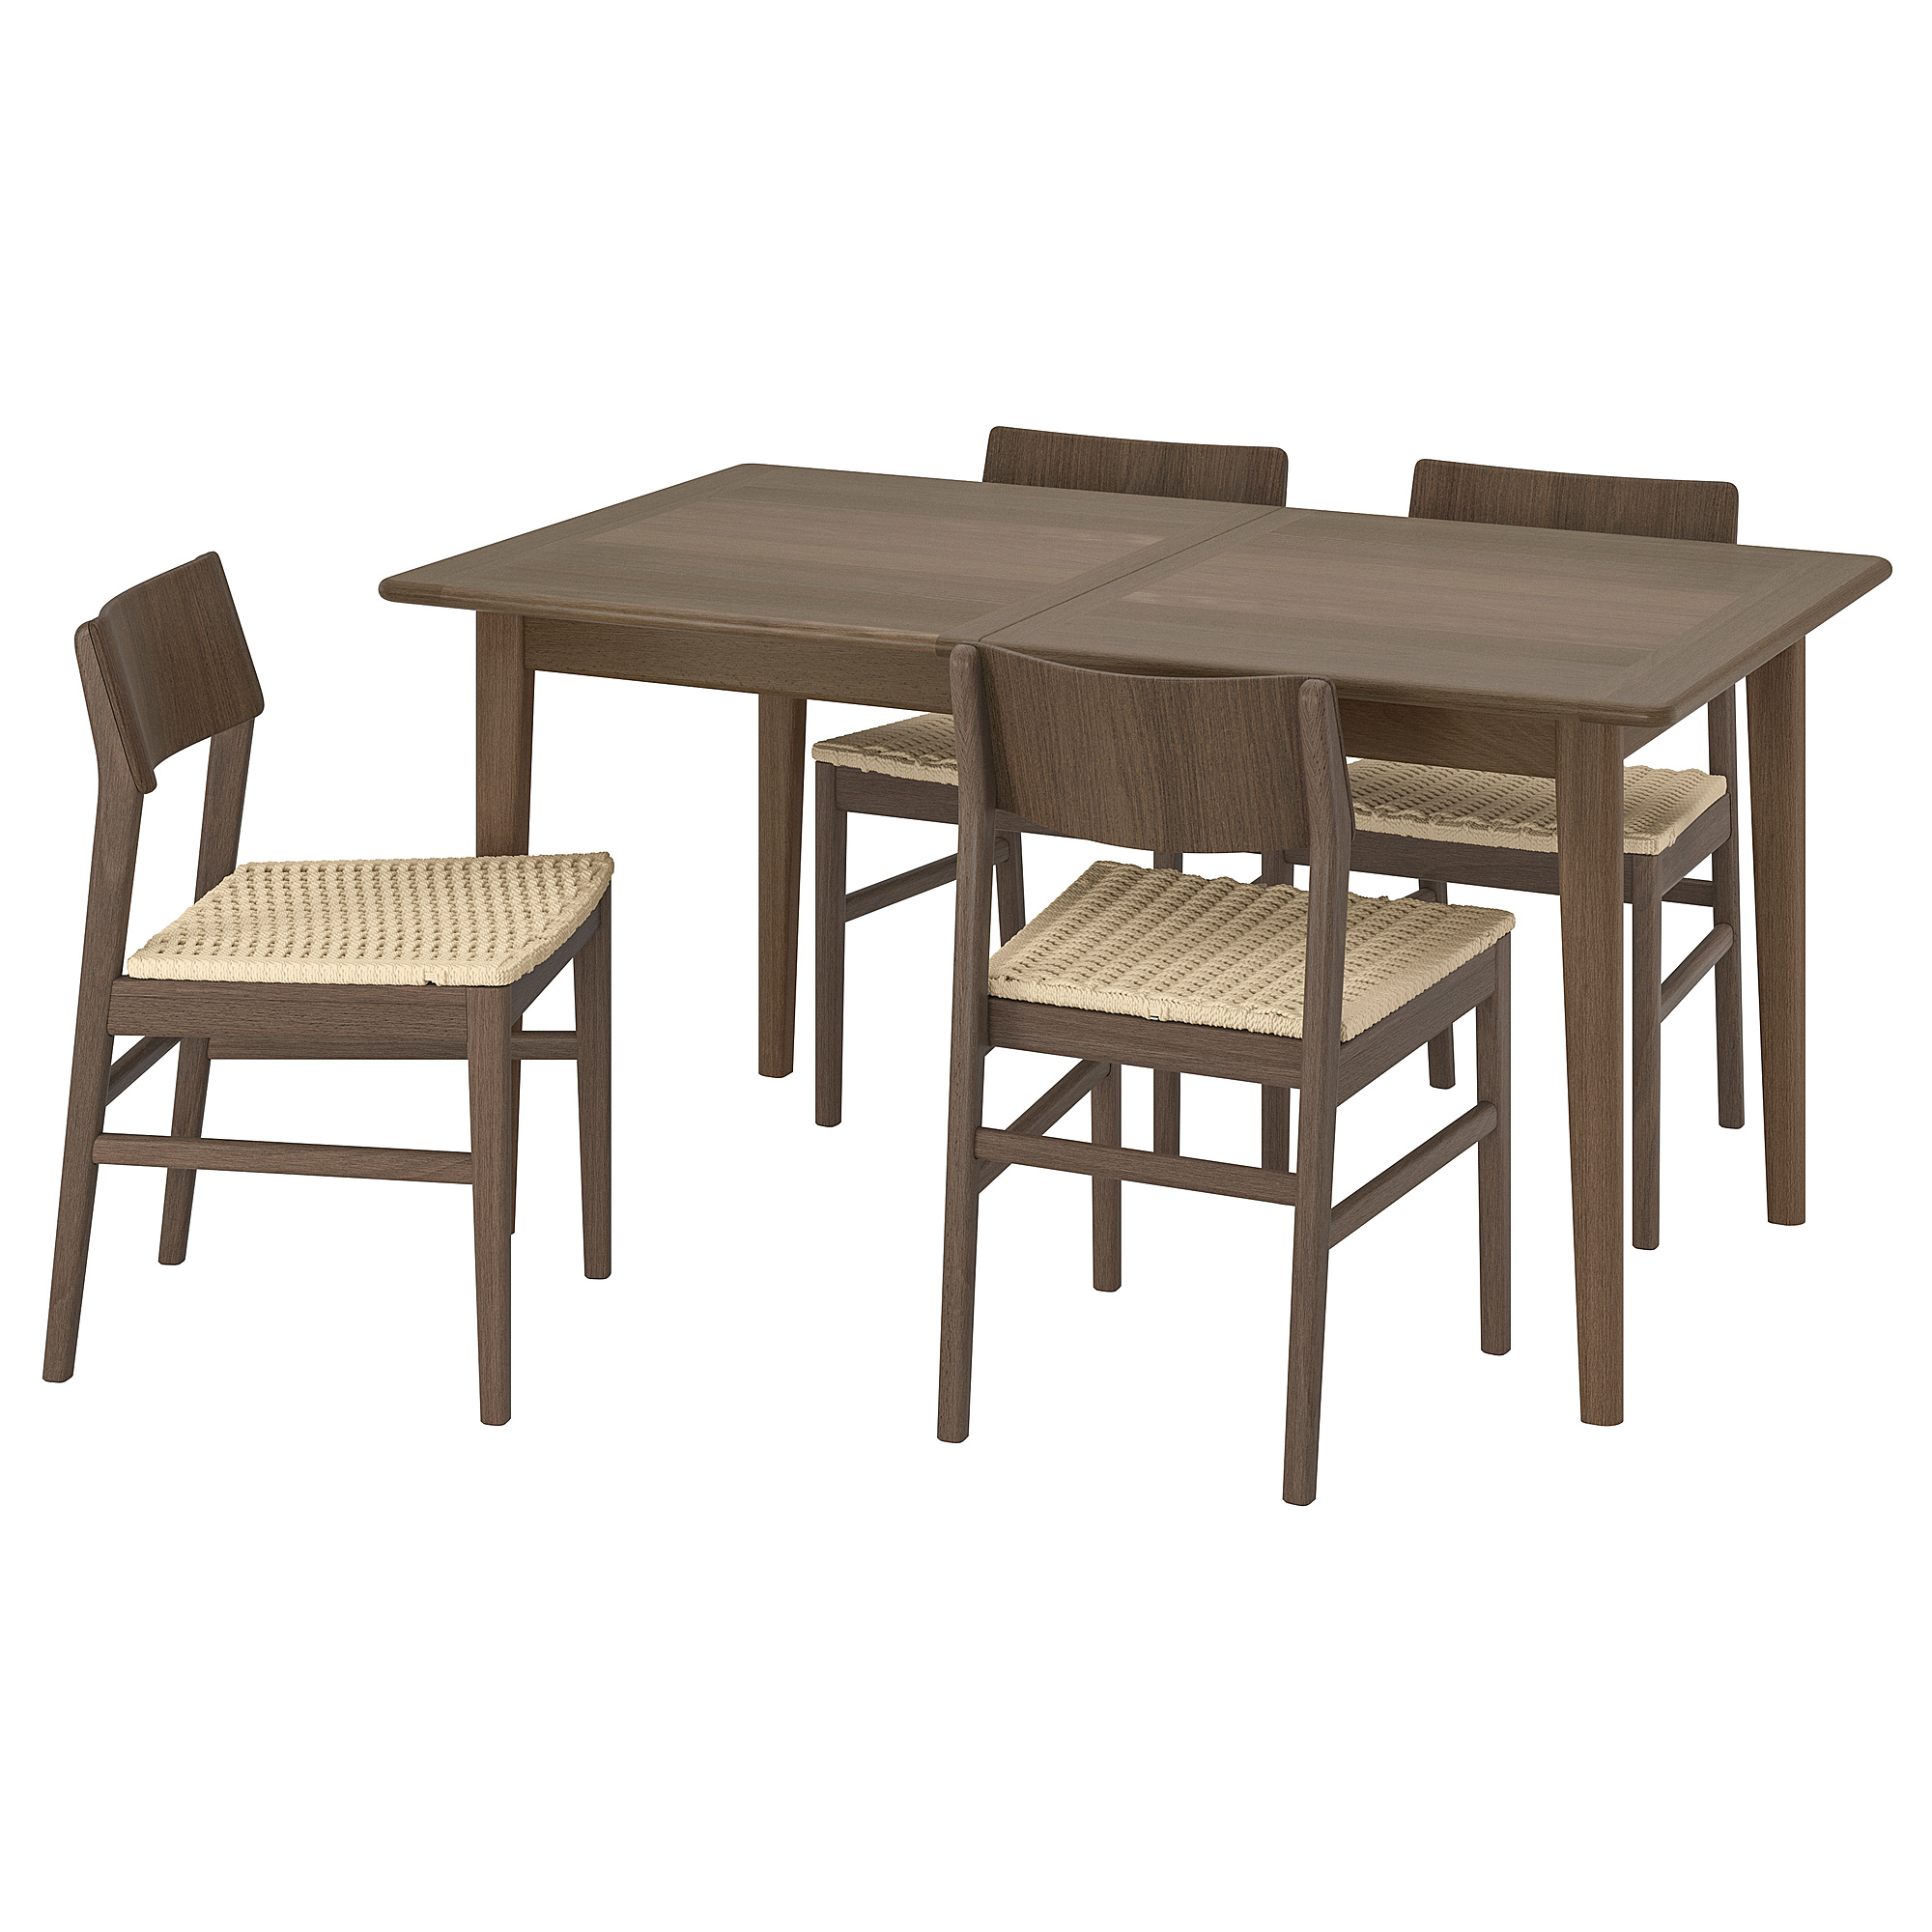 SKANSNÄS/SKANSNÄS table and 4 chairs